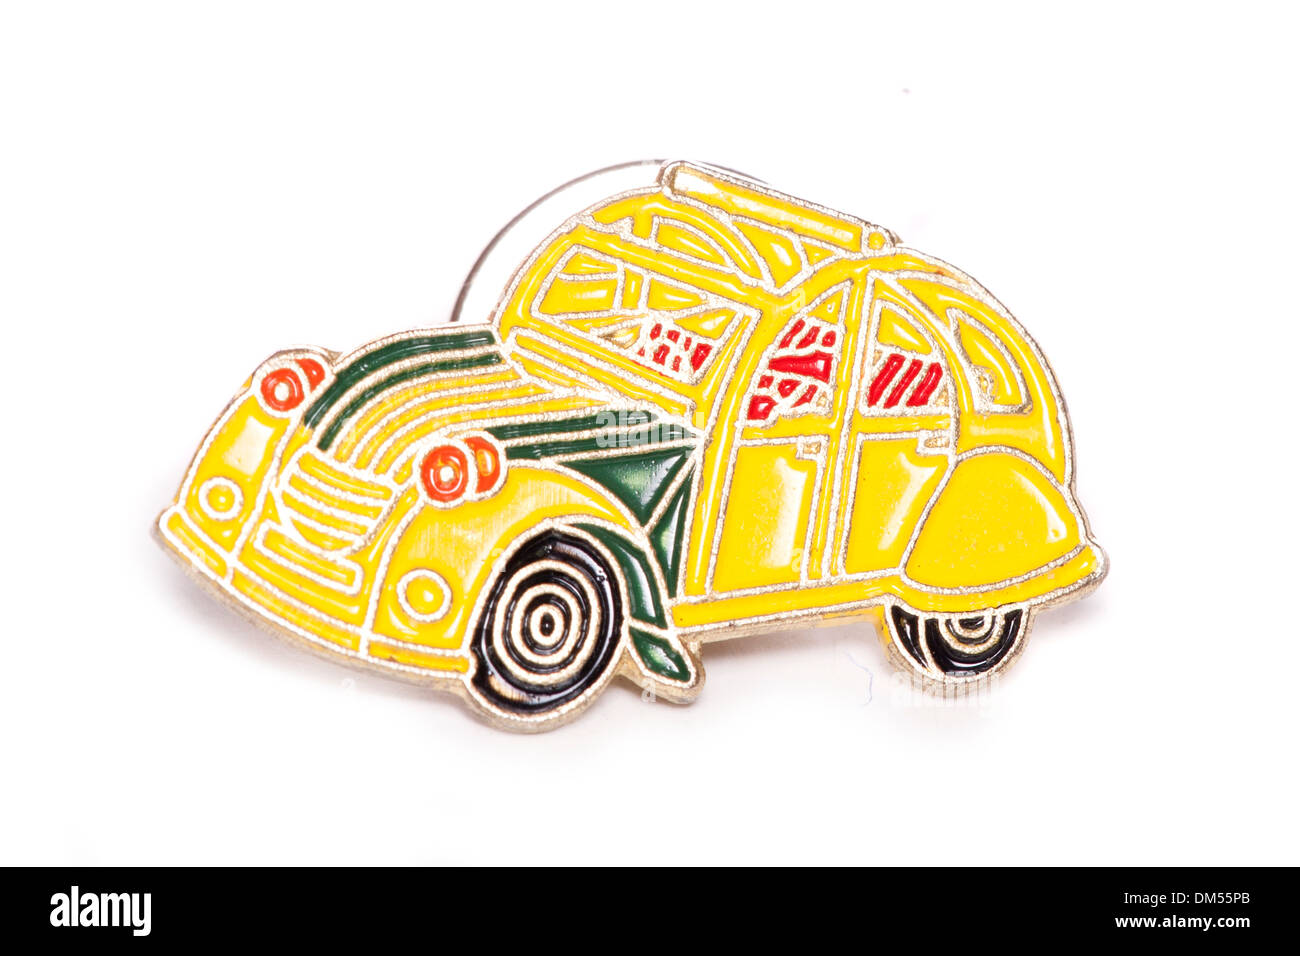 vintage badge brown enamel pin Citroen car pin